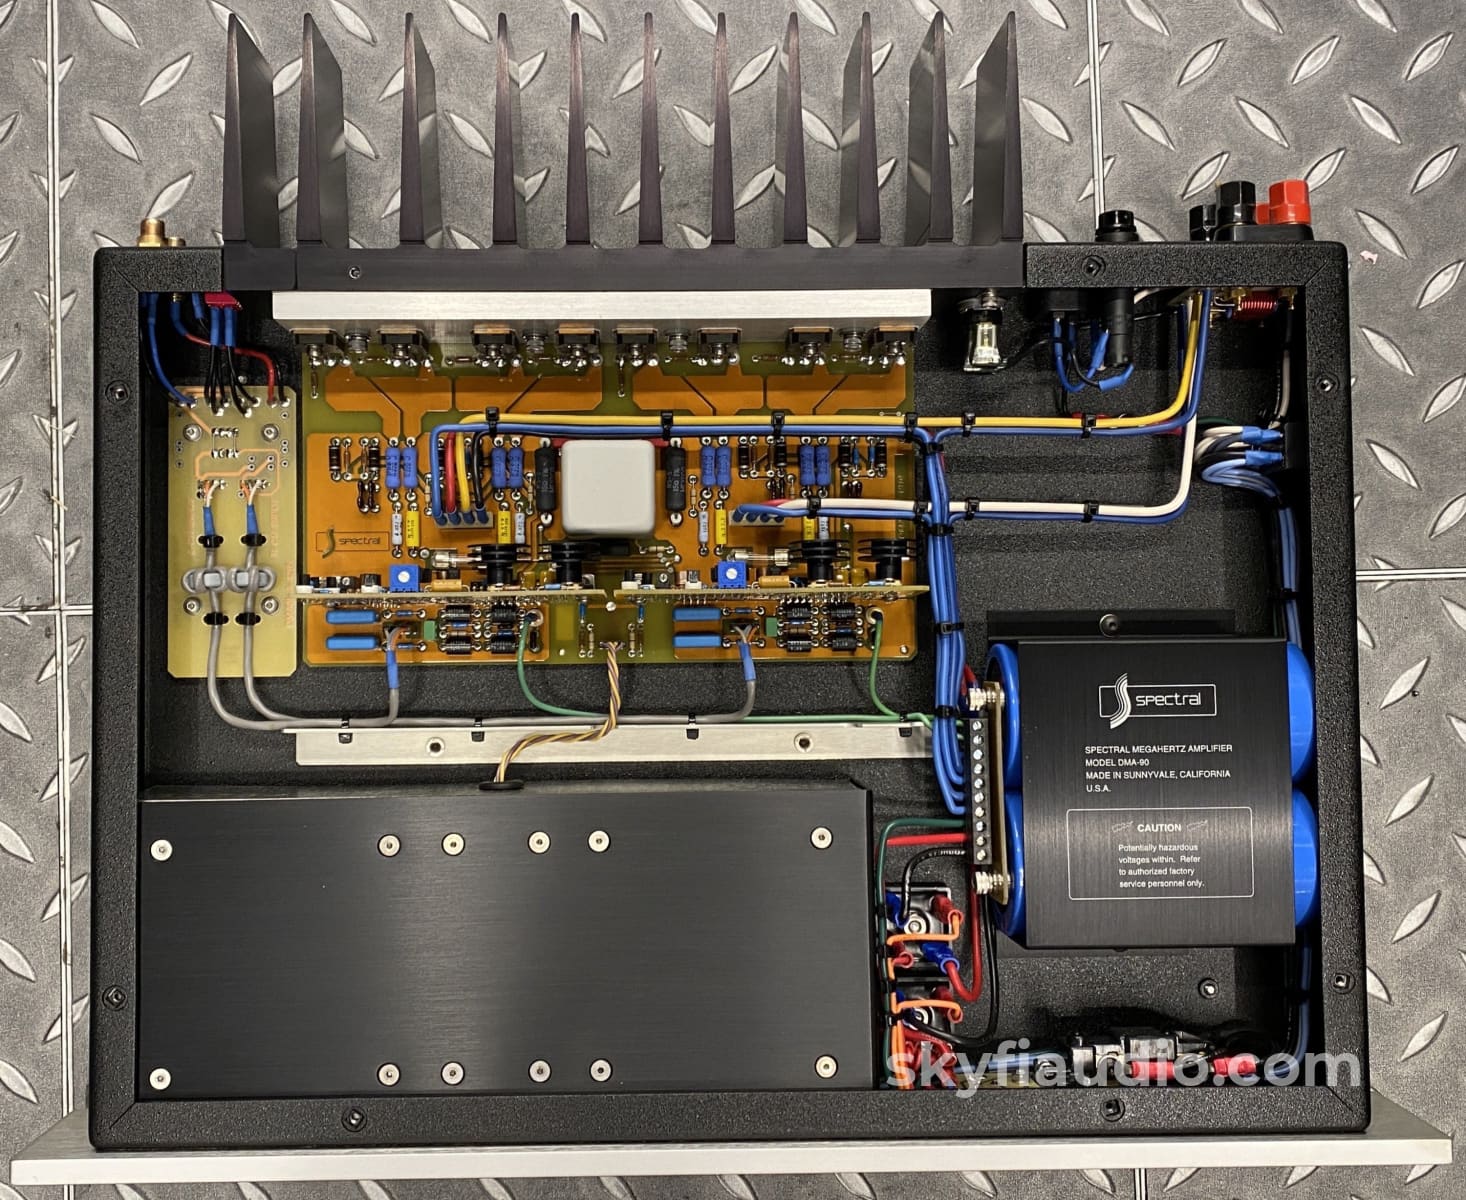 Spectral Dma-90 Amplifier - Like New Complete Set